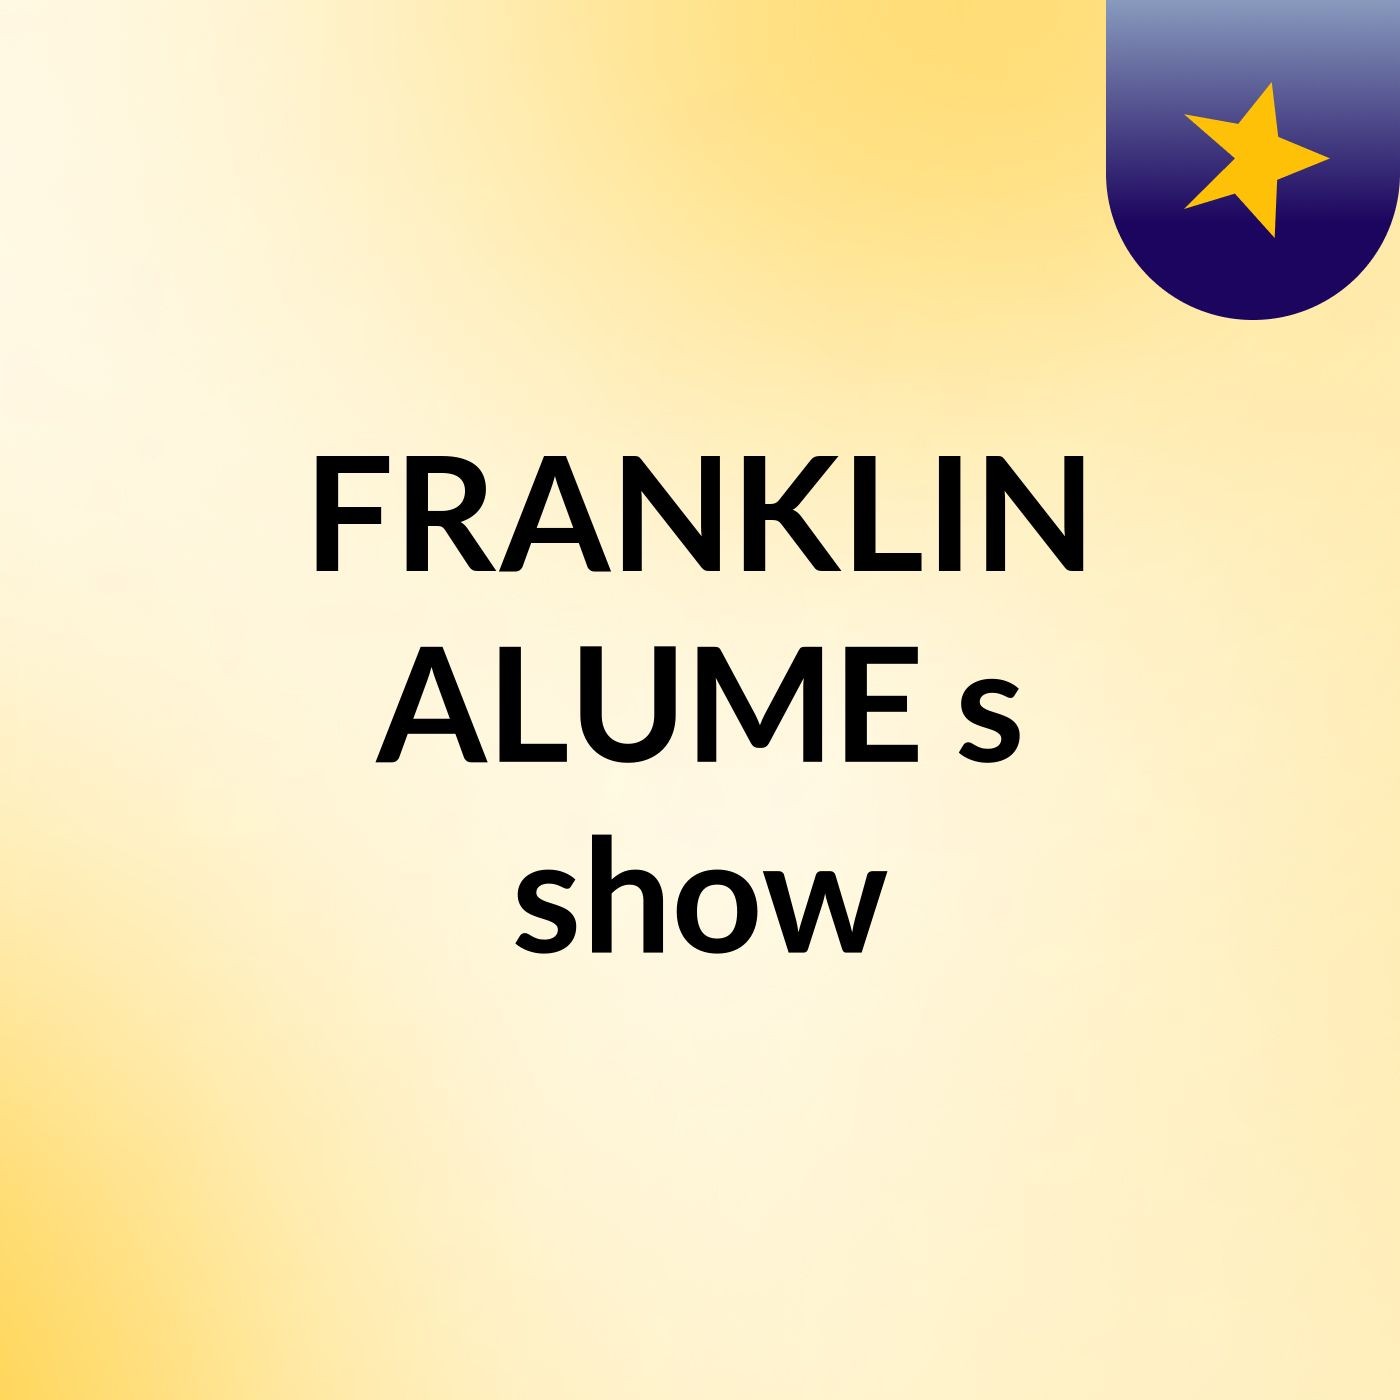 FRANKLIN ALUME's show